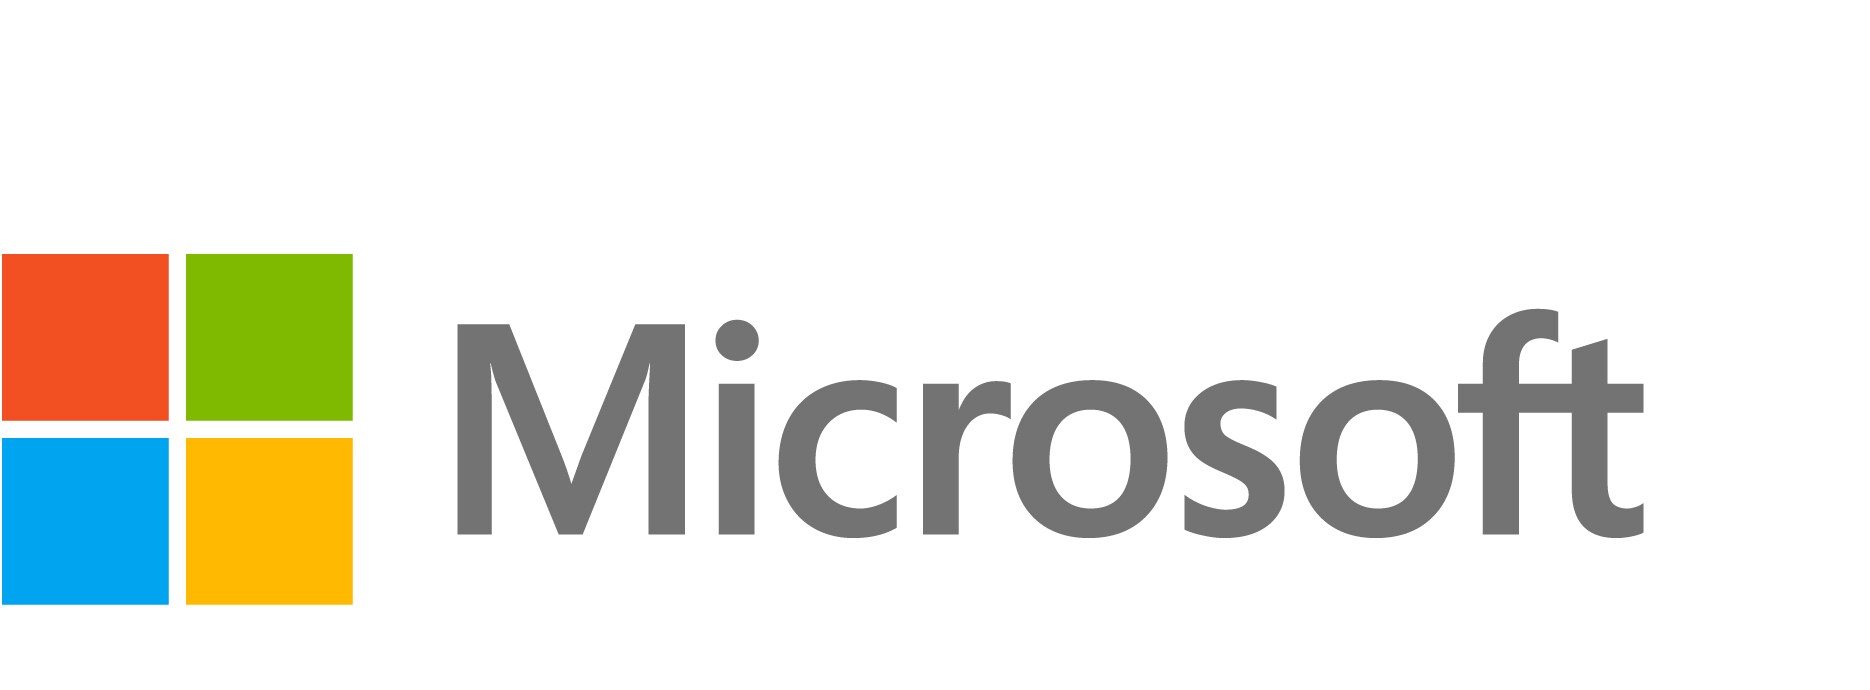 Microsoft BizTalk Server Enterprise Edition - step-up license & software as